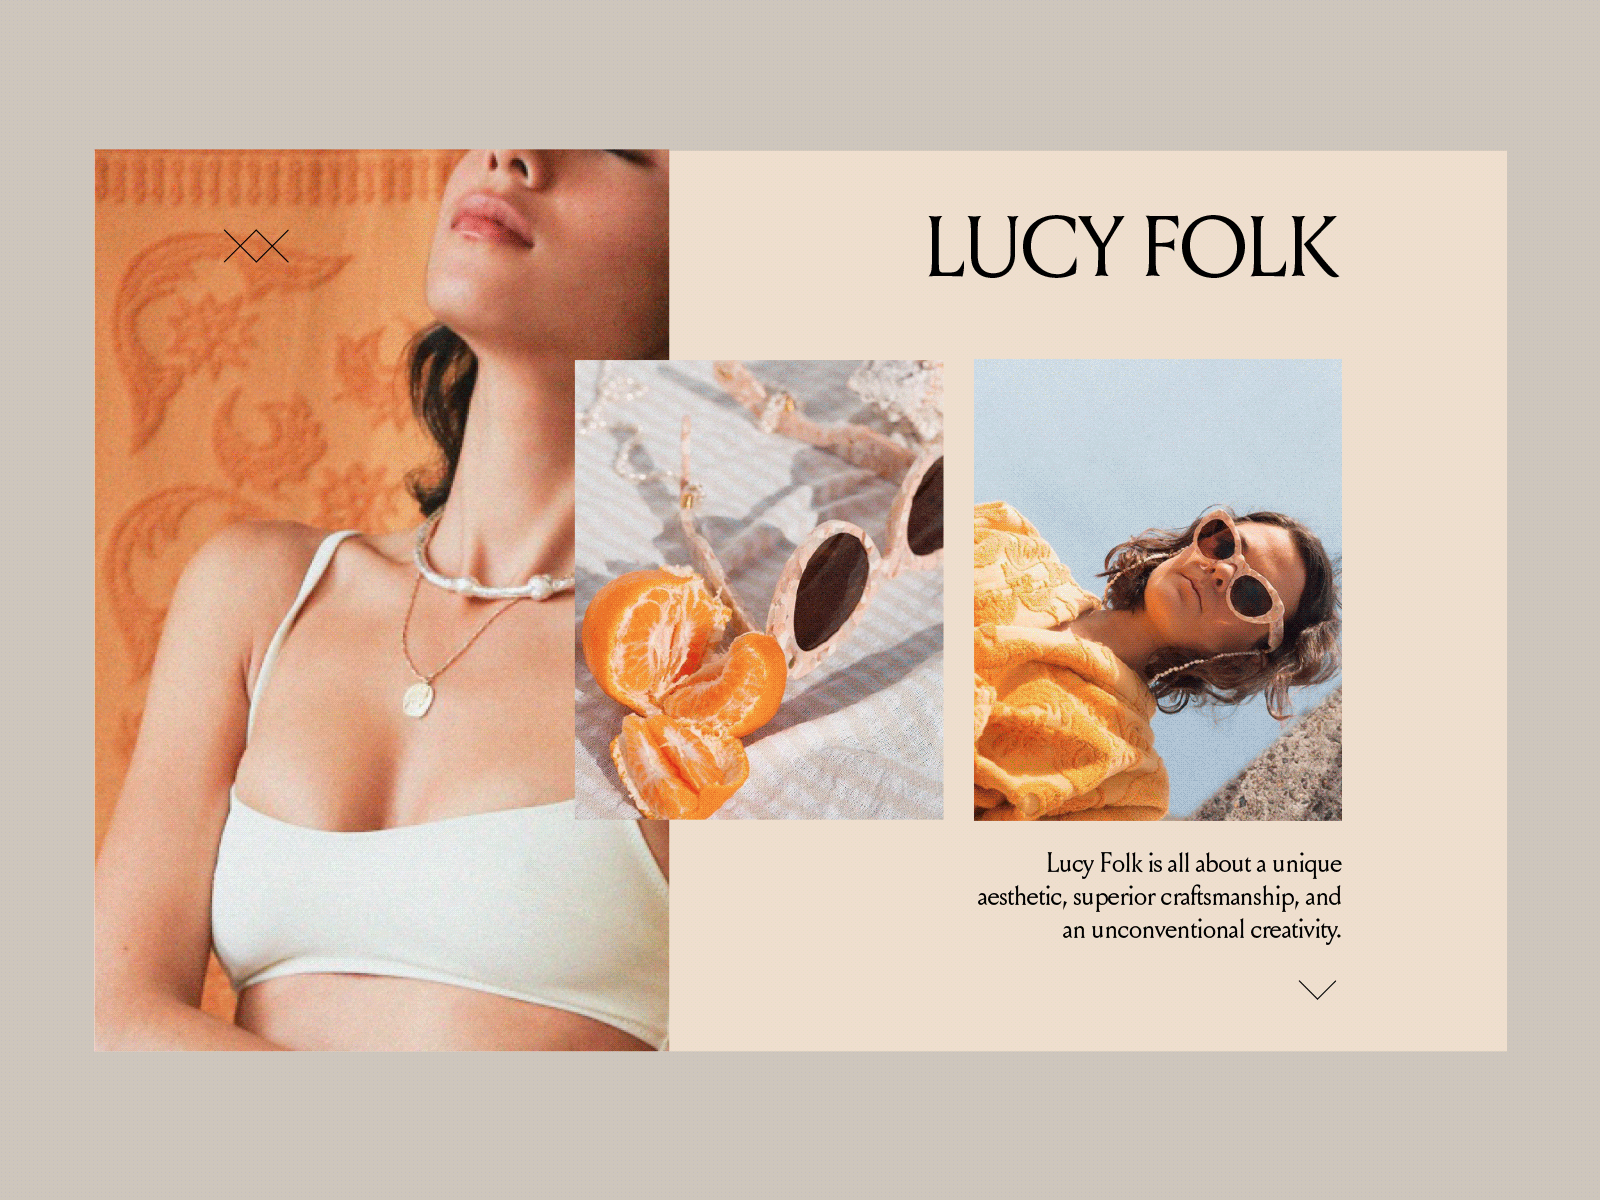 Lucy Folk